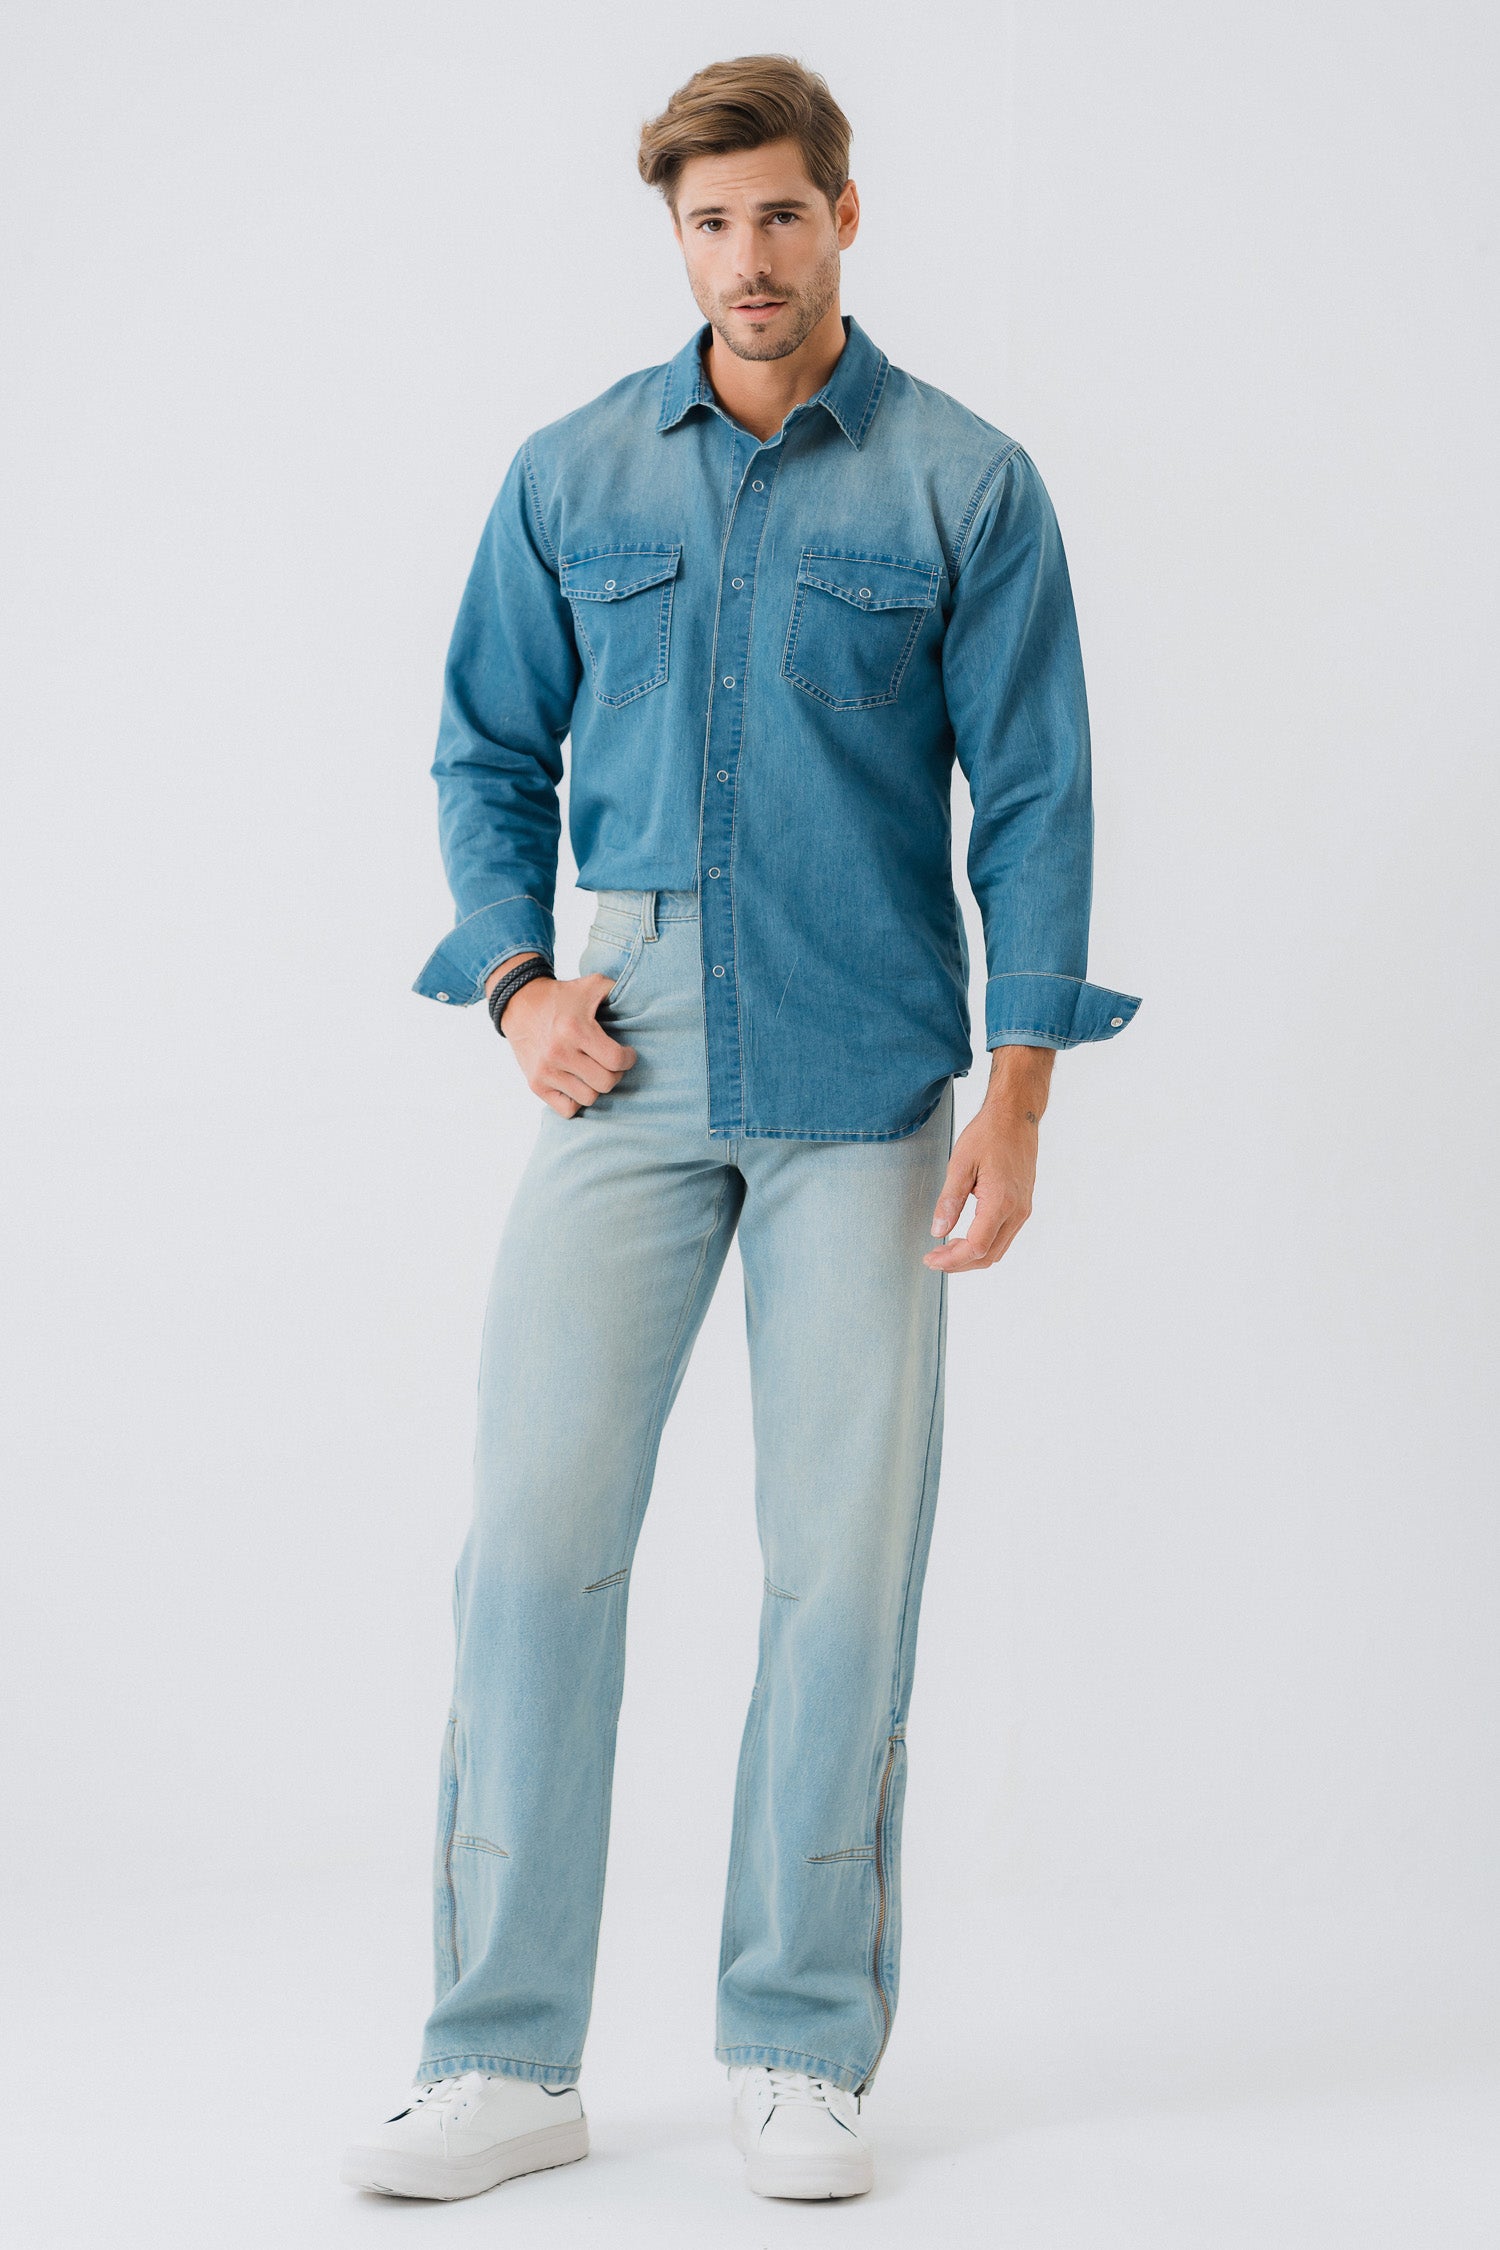 Louis Philippe Jeans Slim Men Blue Jeans - Buy Louis Philippe Jeans Slim Men  Blue Jeans Online at Best Prices in India | Flipkart.com